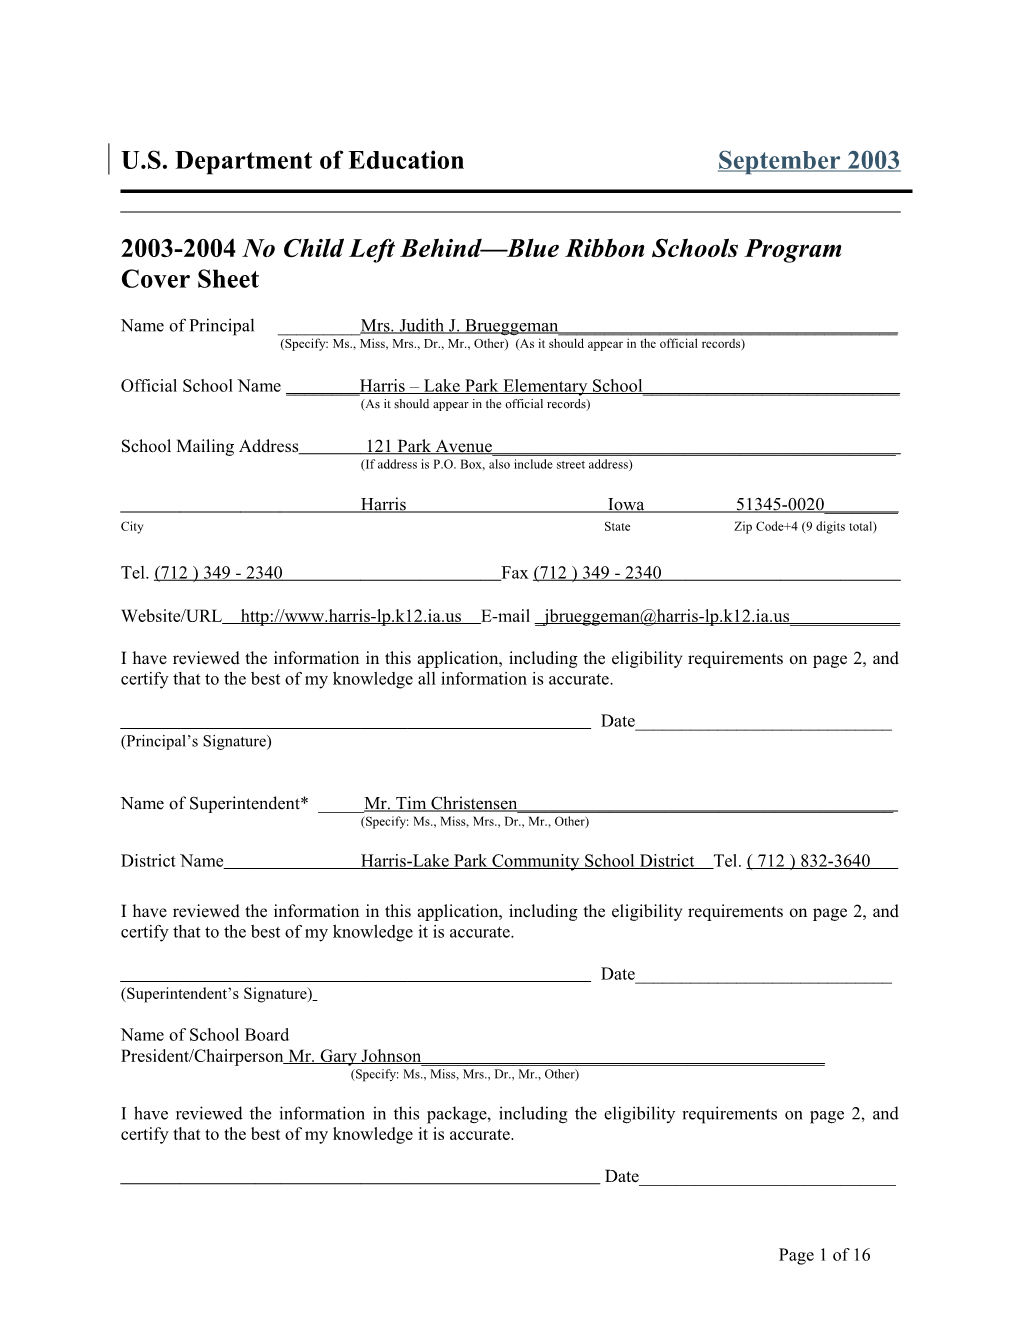 Harris-Lake Park Elementary School 2004 No Child Left Behind-Blue Ribbon School Application